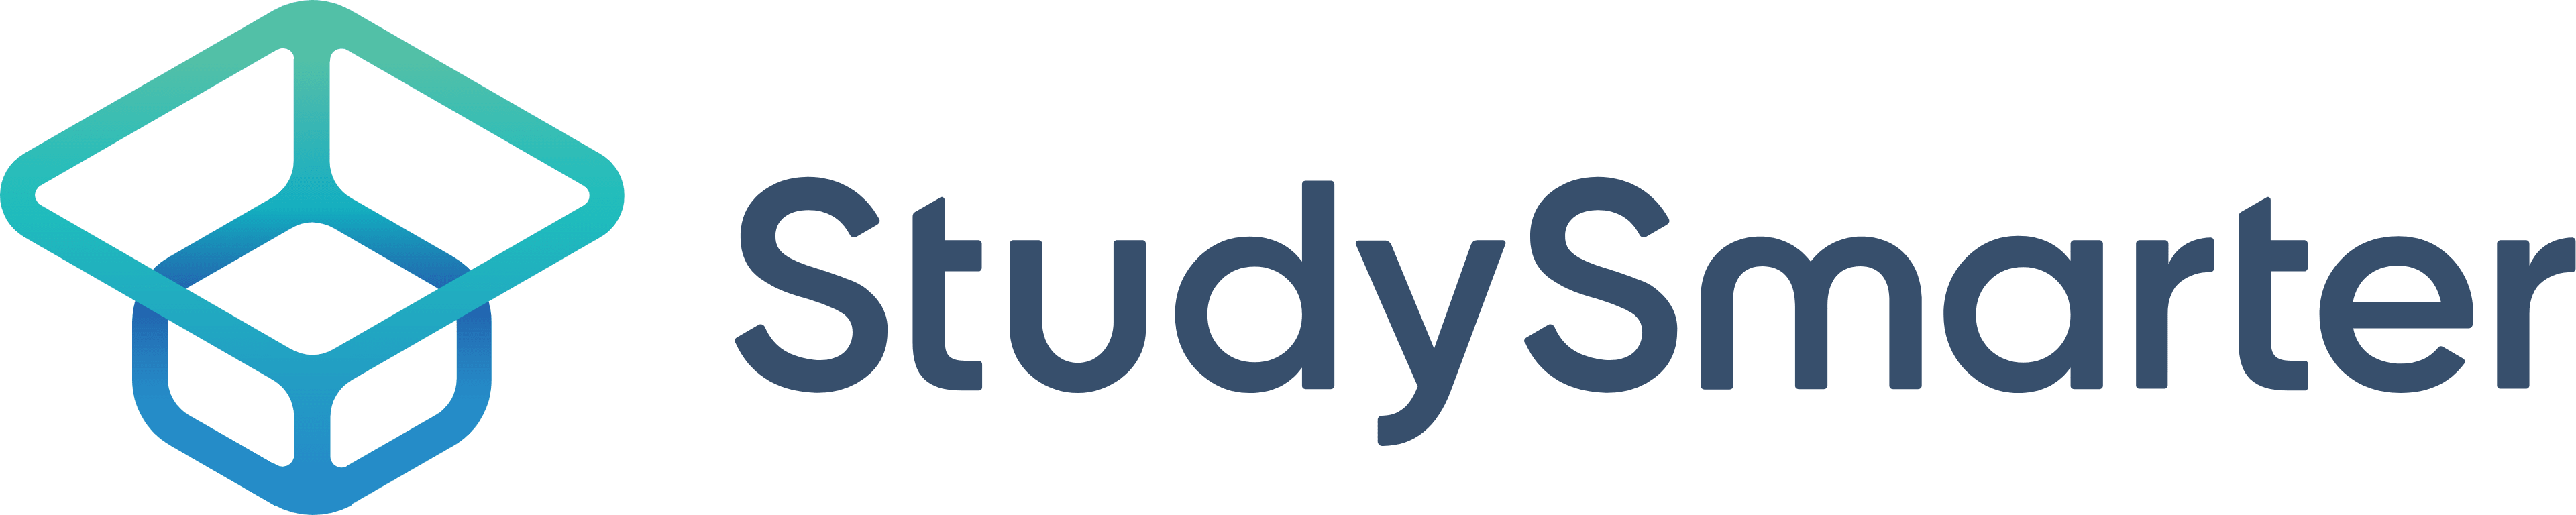 StudySmarter logo